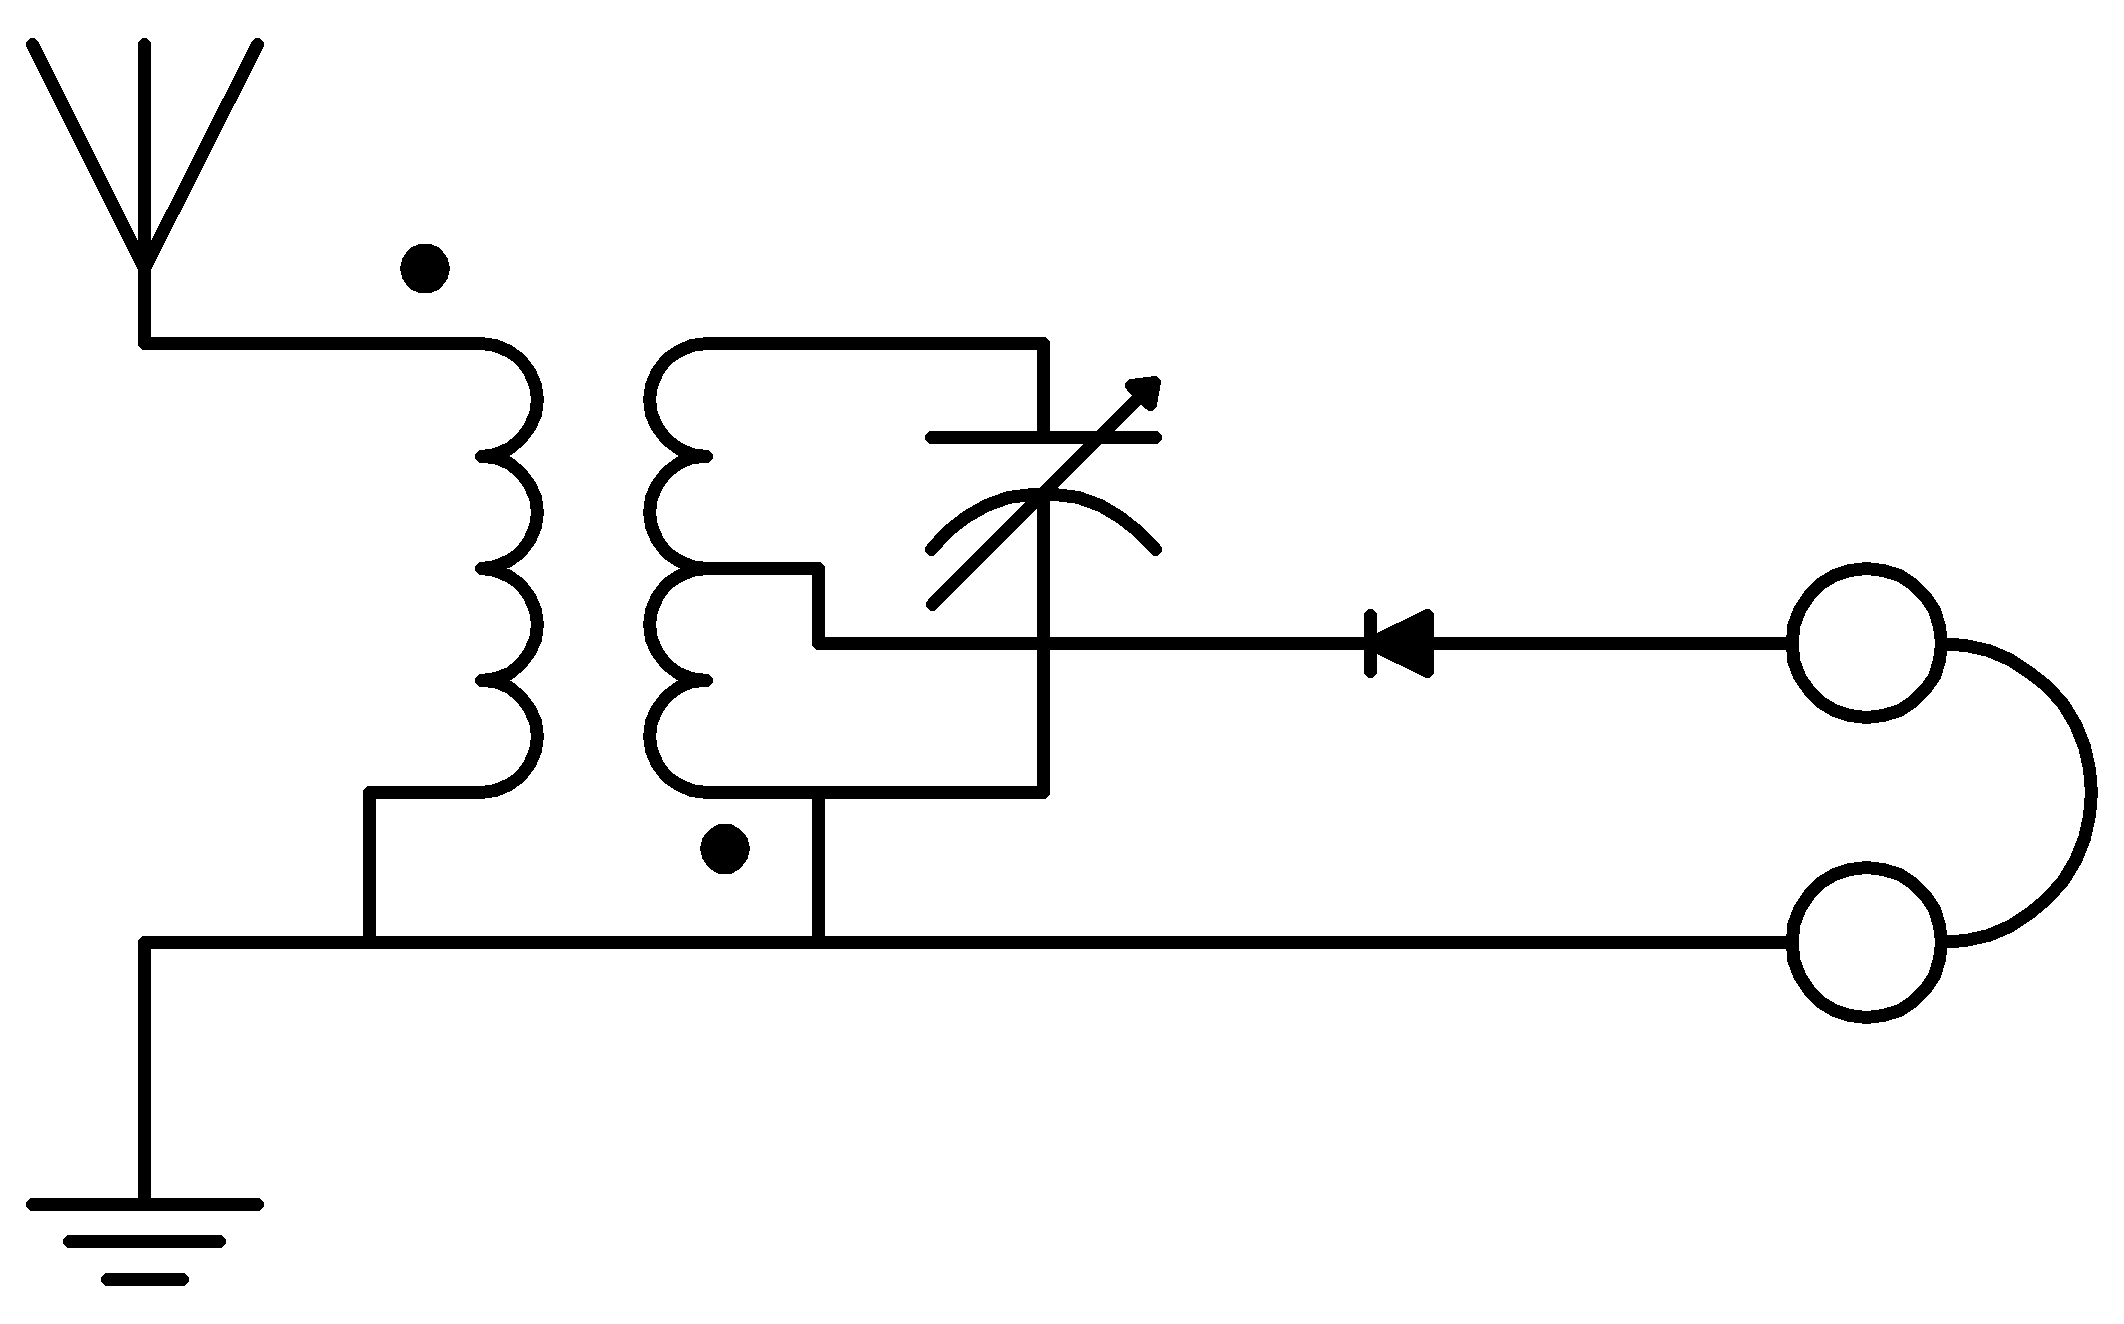 Component. symbol for a resistor: Clipart Rsa Iec Variable ...